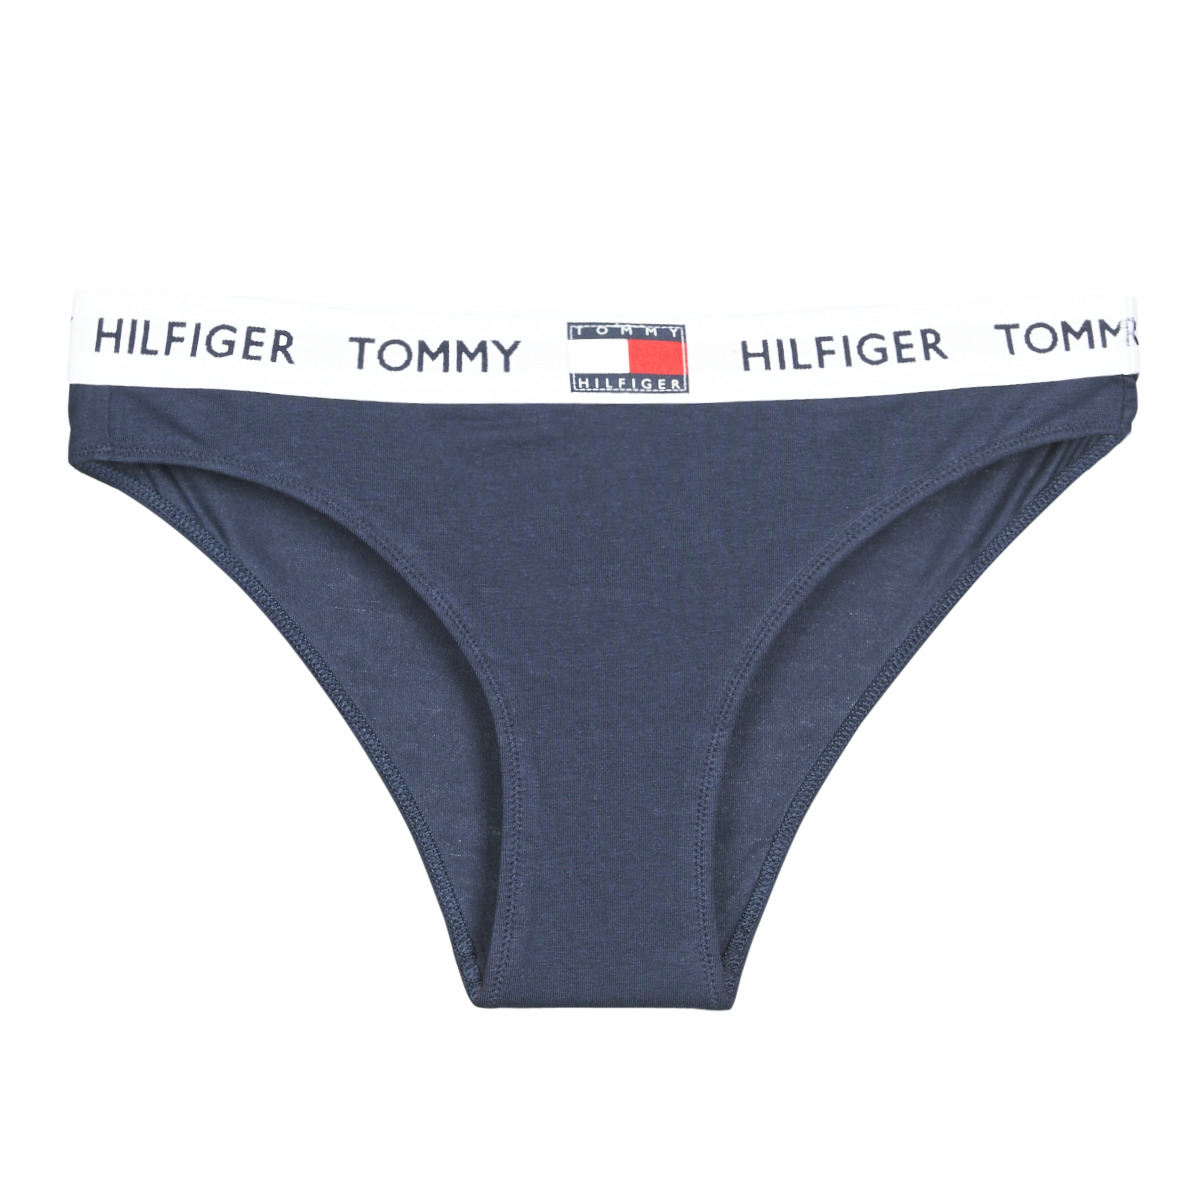 Tommy Hilfiger - NET ! - Spartoo Underwear delivery | ORGANIC Knickers/panties Free COTTON Marine Women